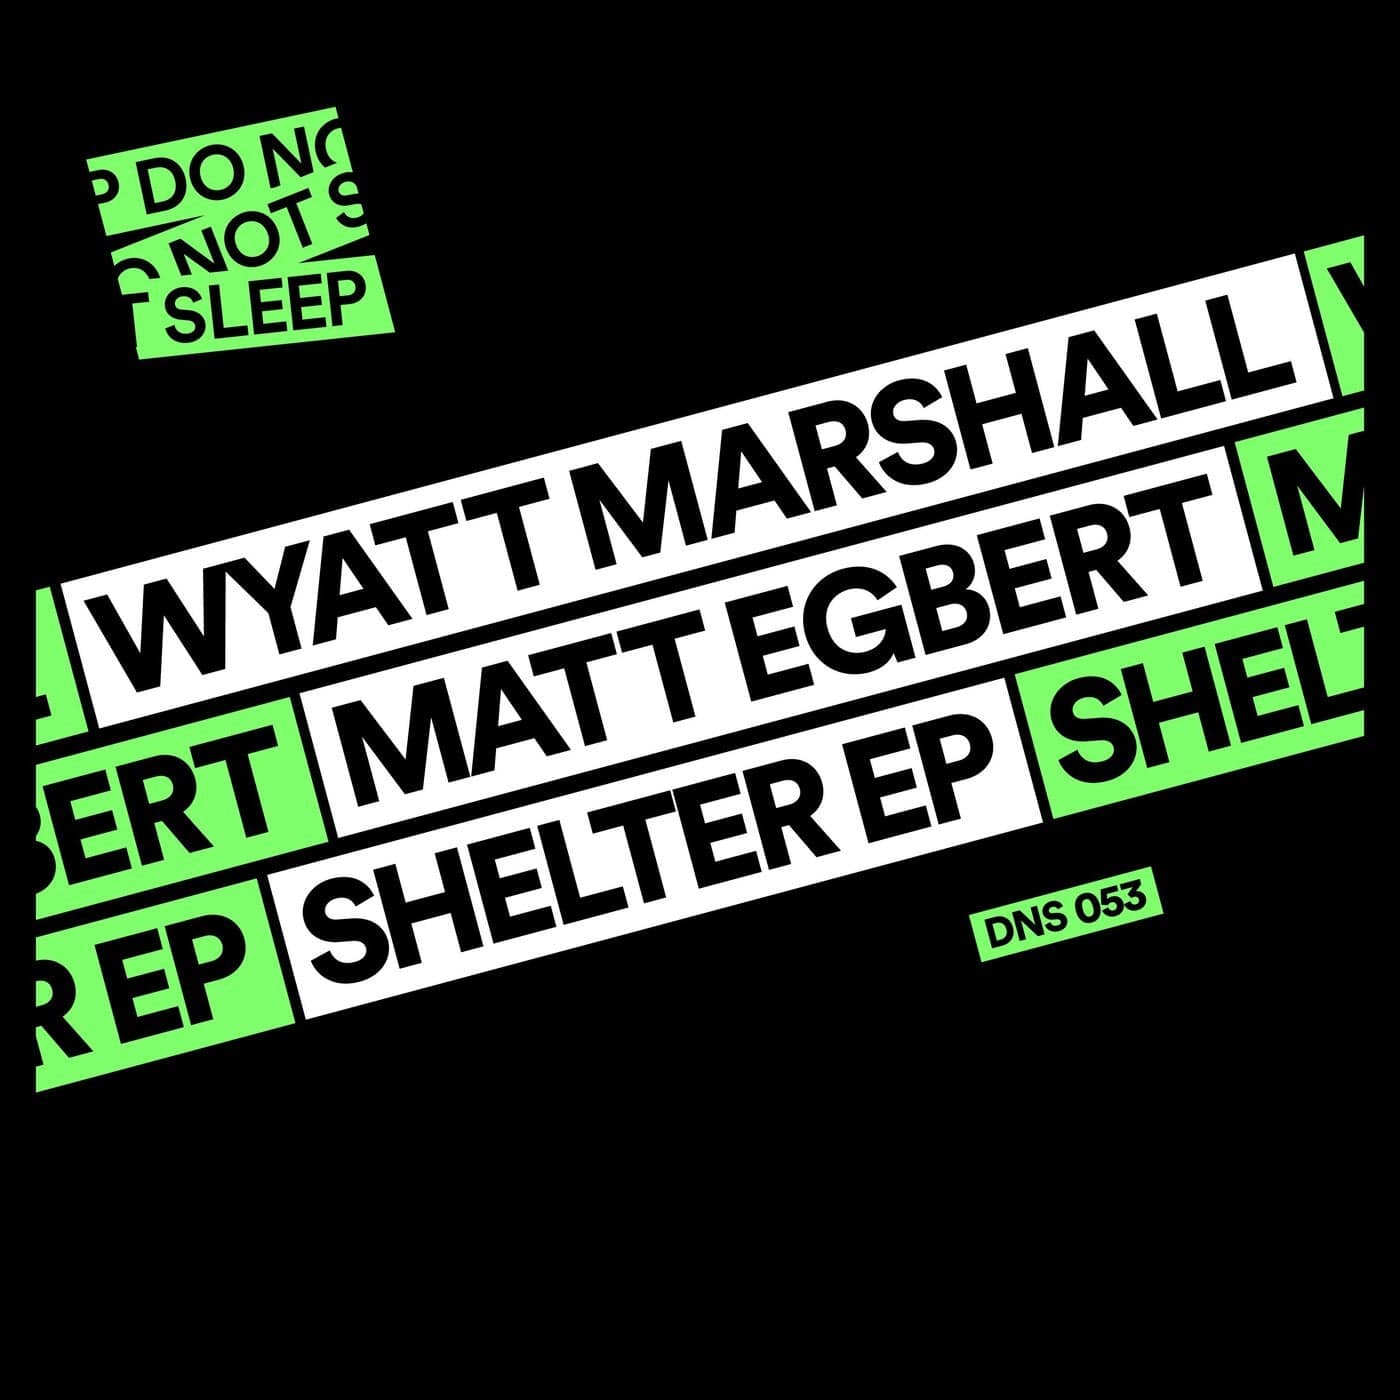 Download Matt Egbert, Wyatt Marshall - Shelter EP on Electrobuzz